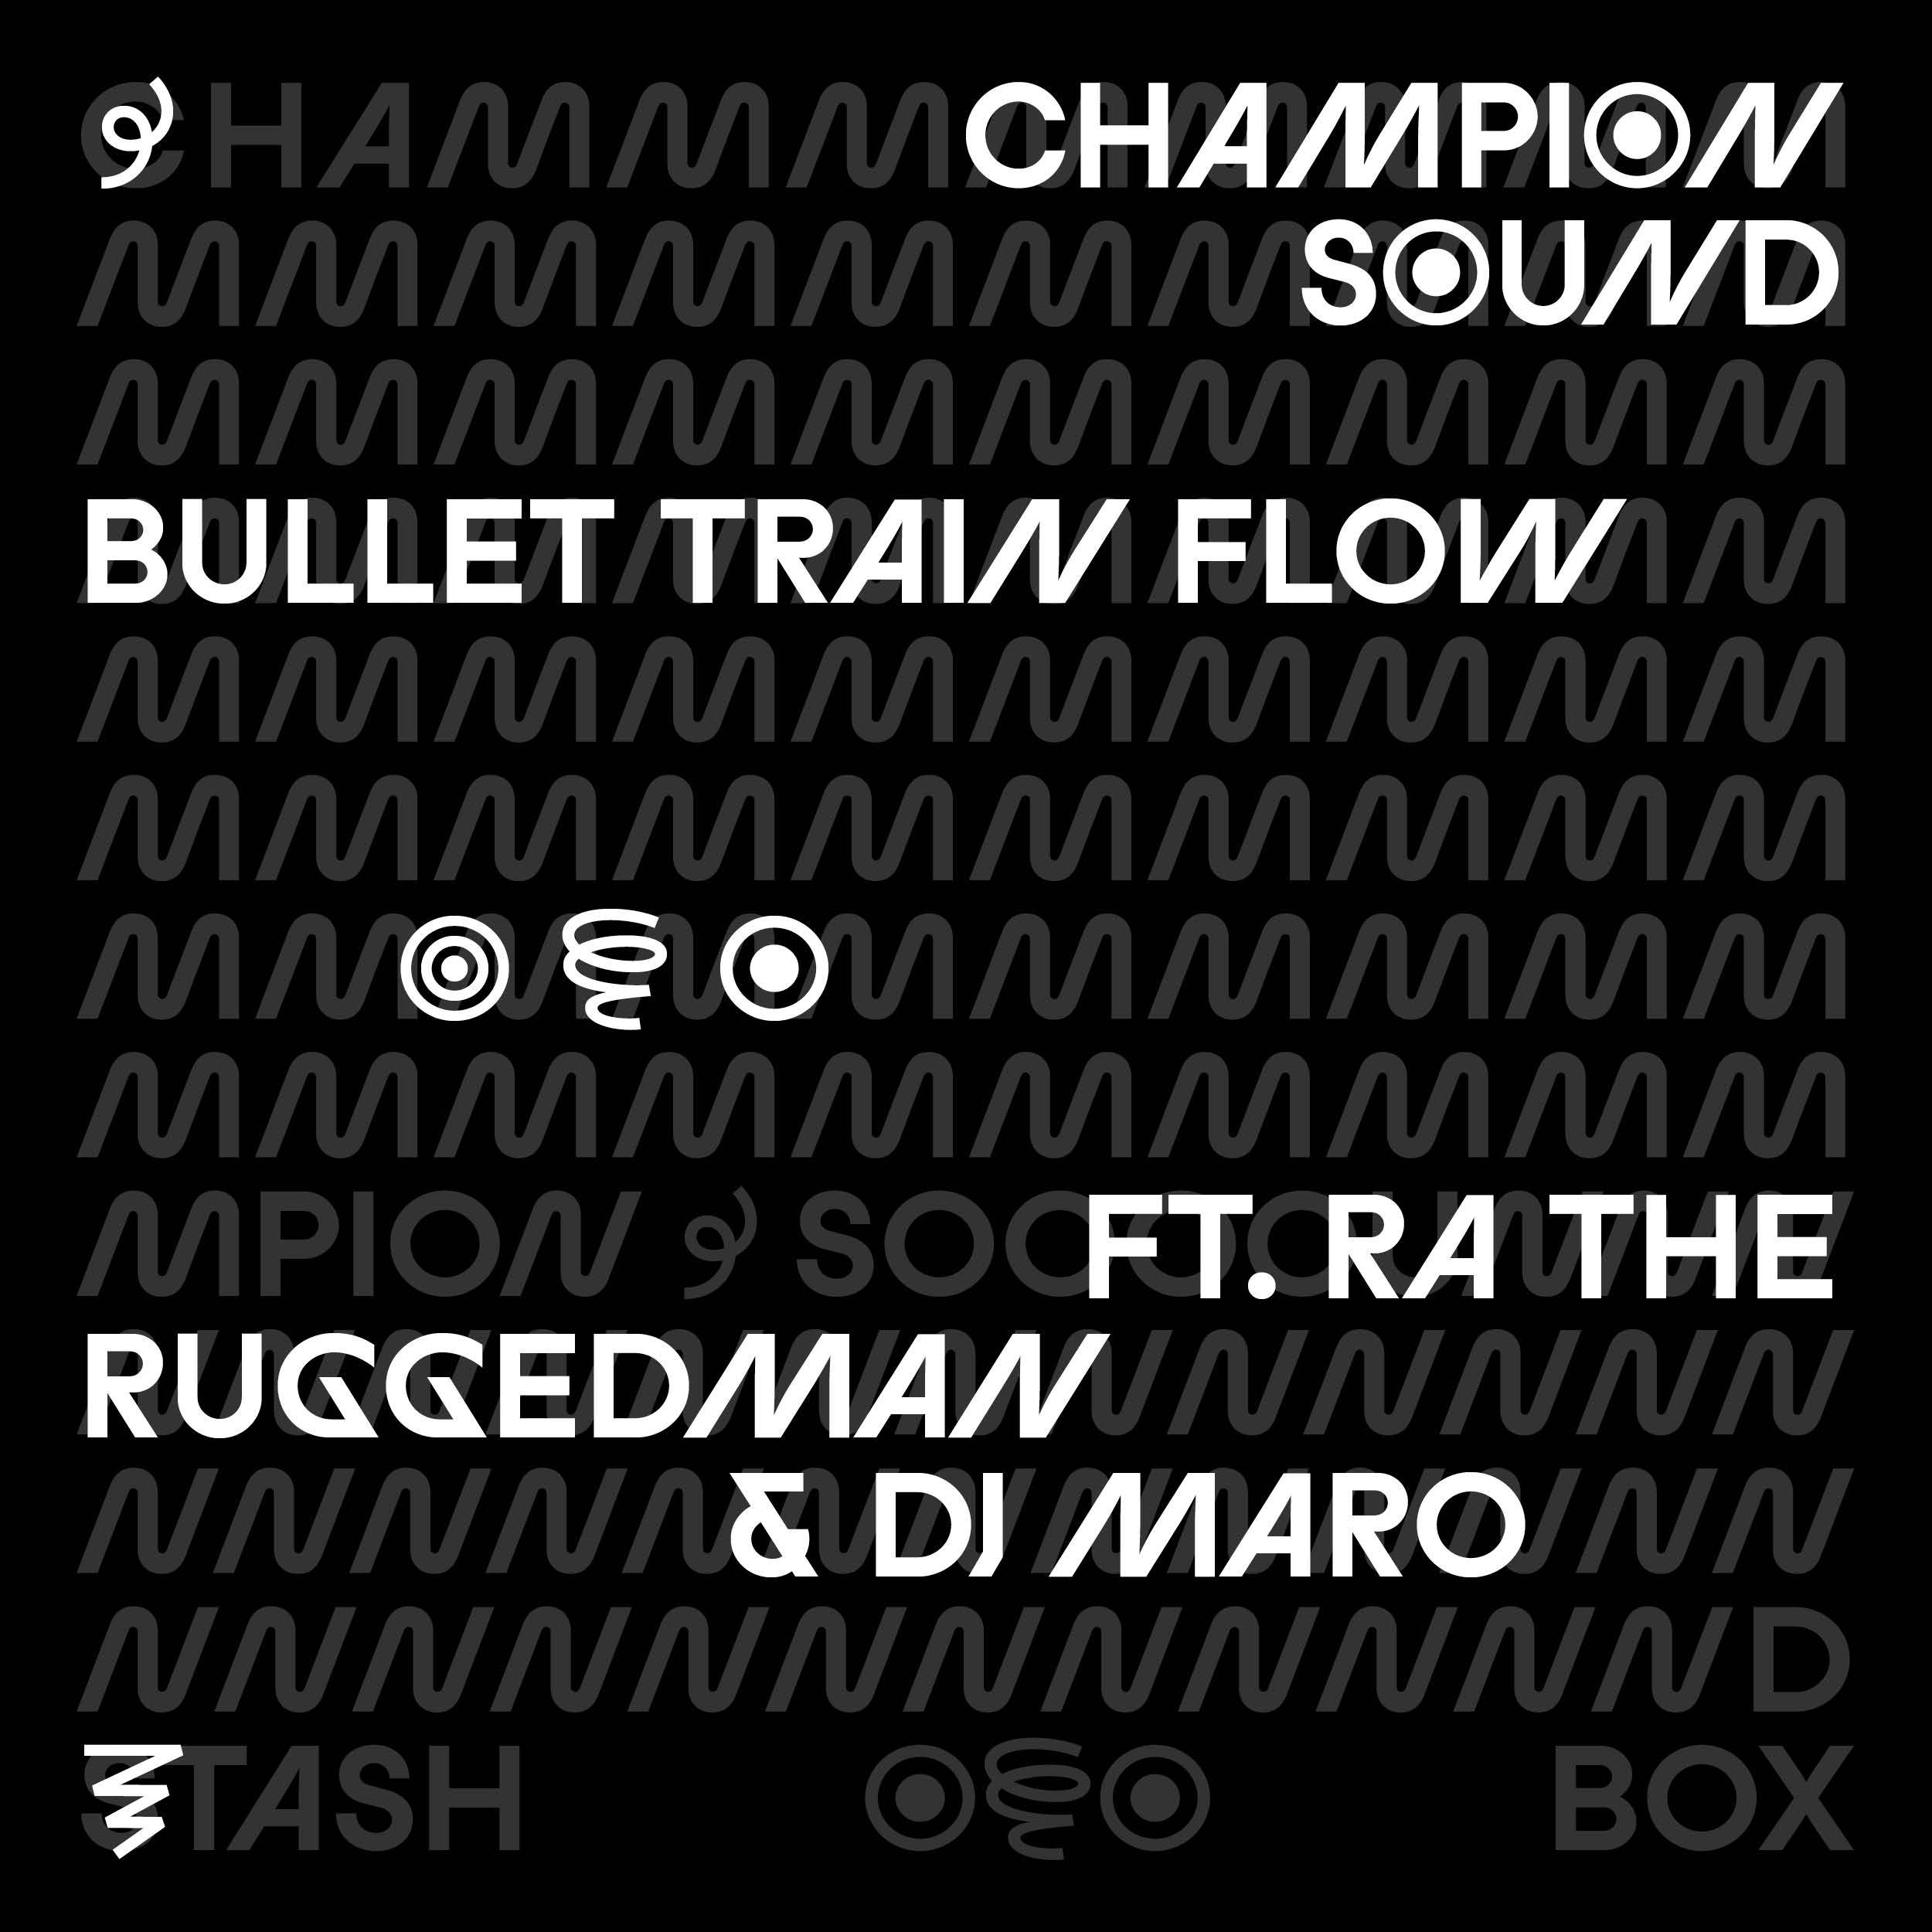 Champion Sound x DJ Maro x R.A. The Rugged Man – “Bullet Train Flow”